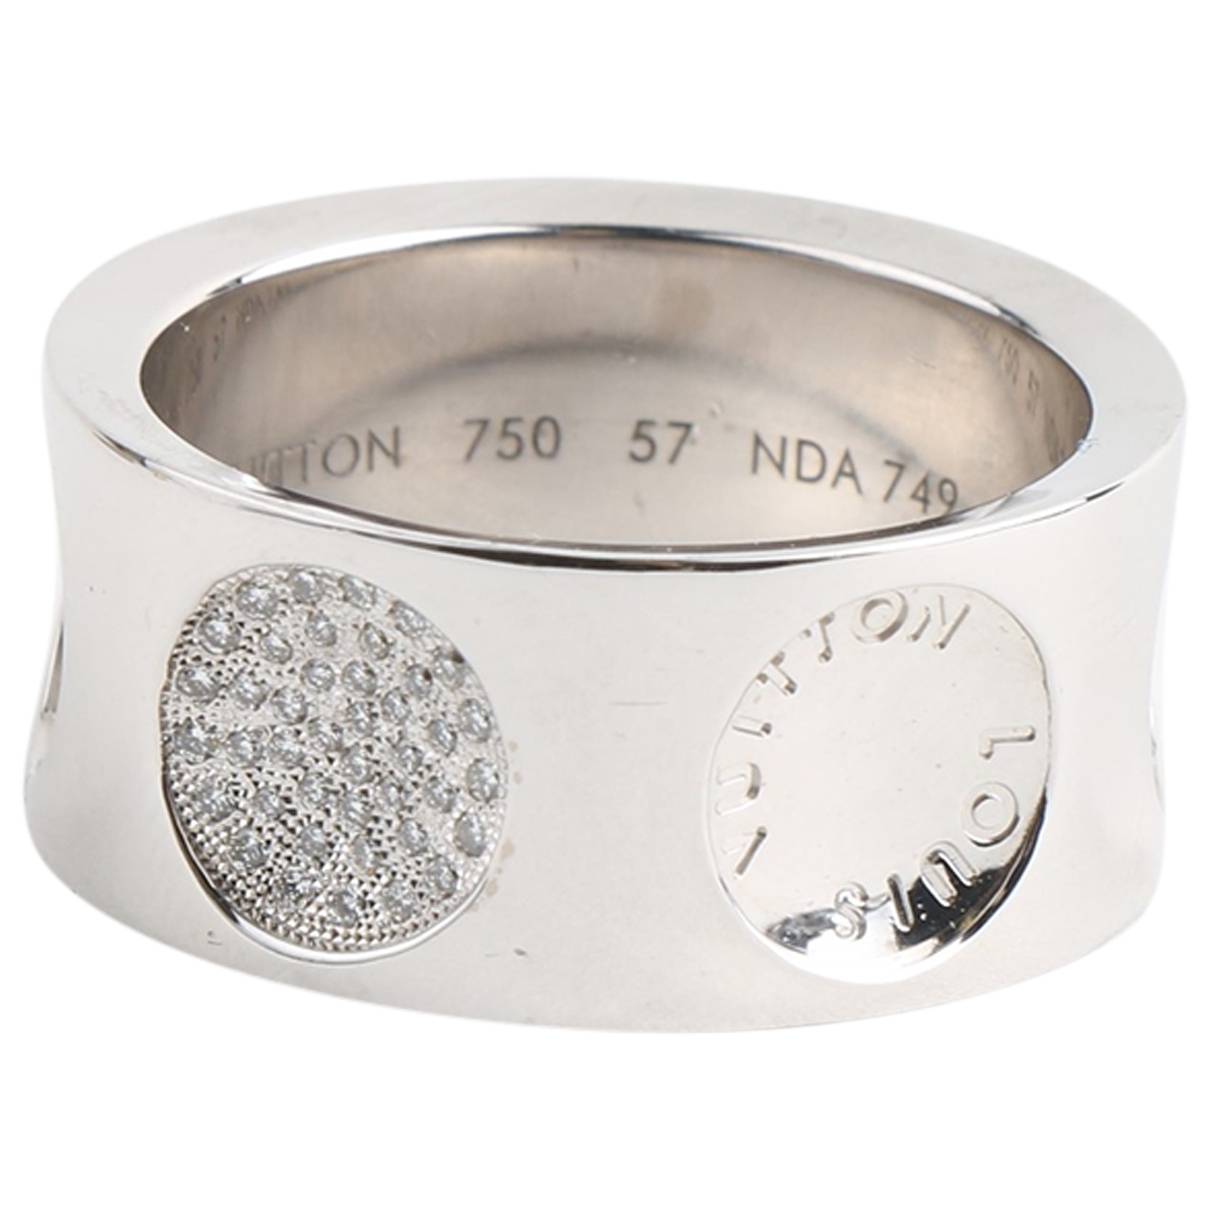 Louis Vuitton Empreinte Diamond Ring